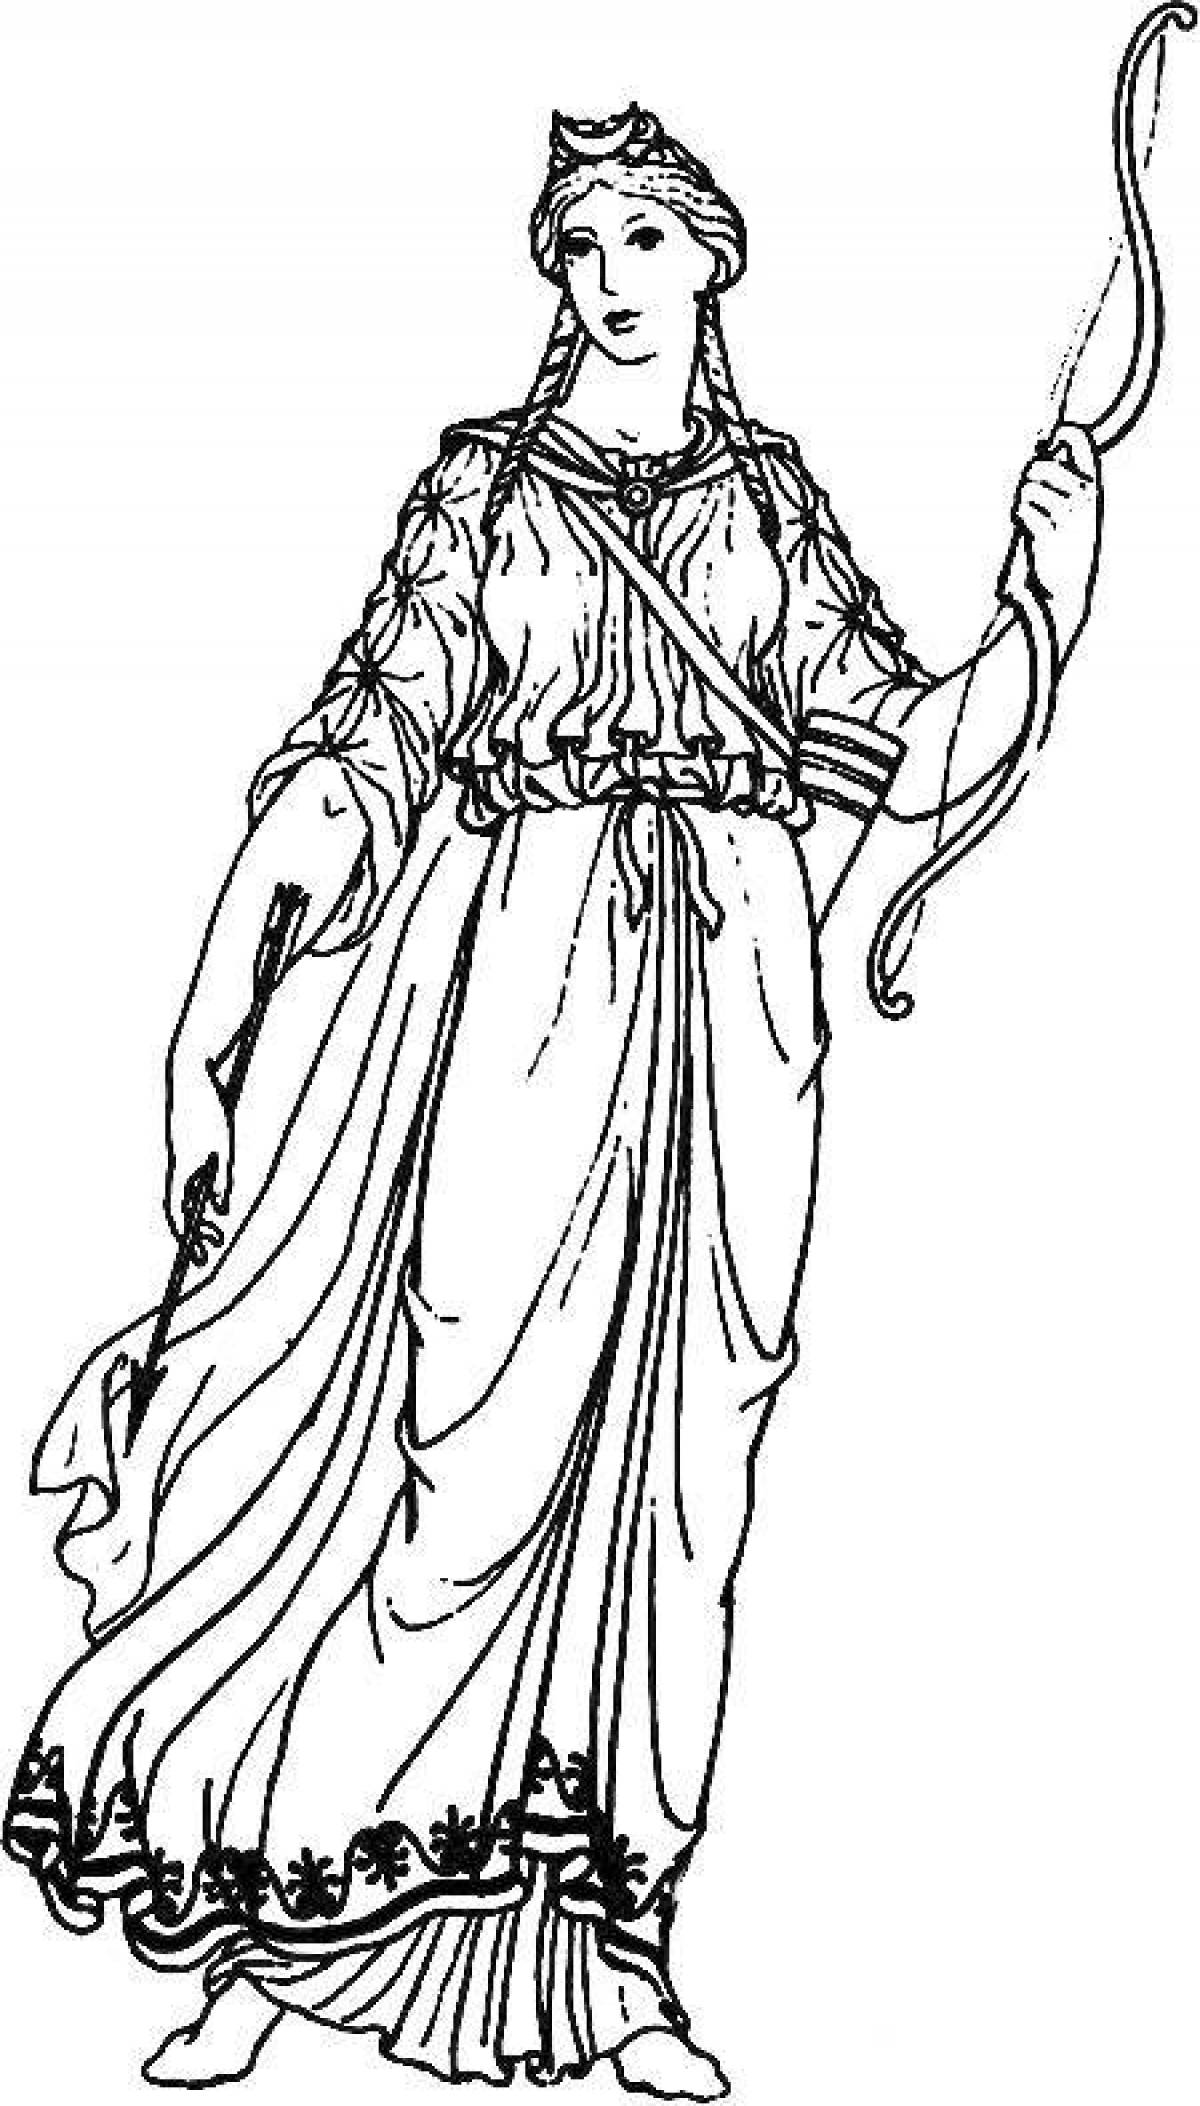 Artemis deluxe coloring book